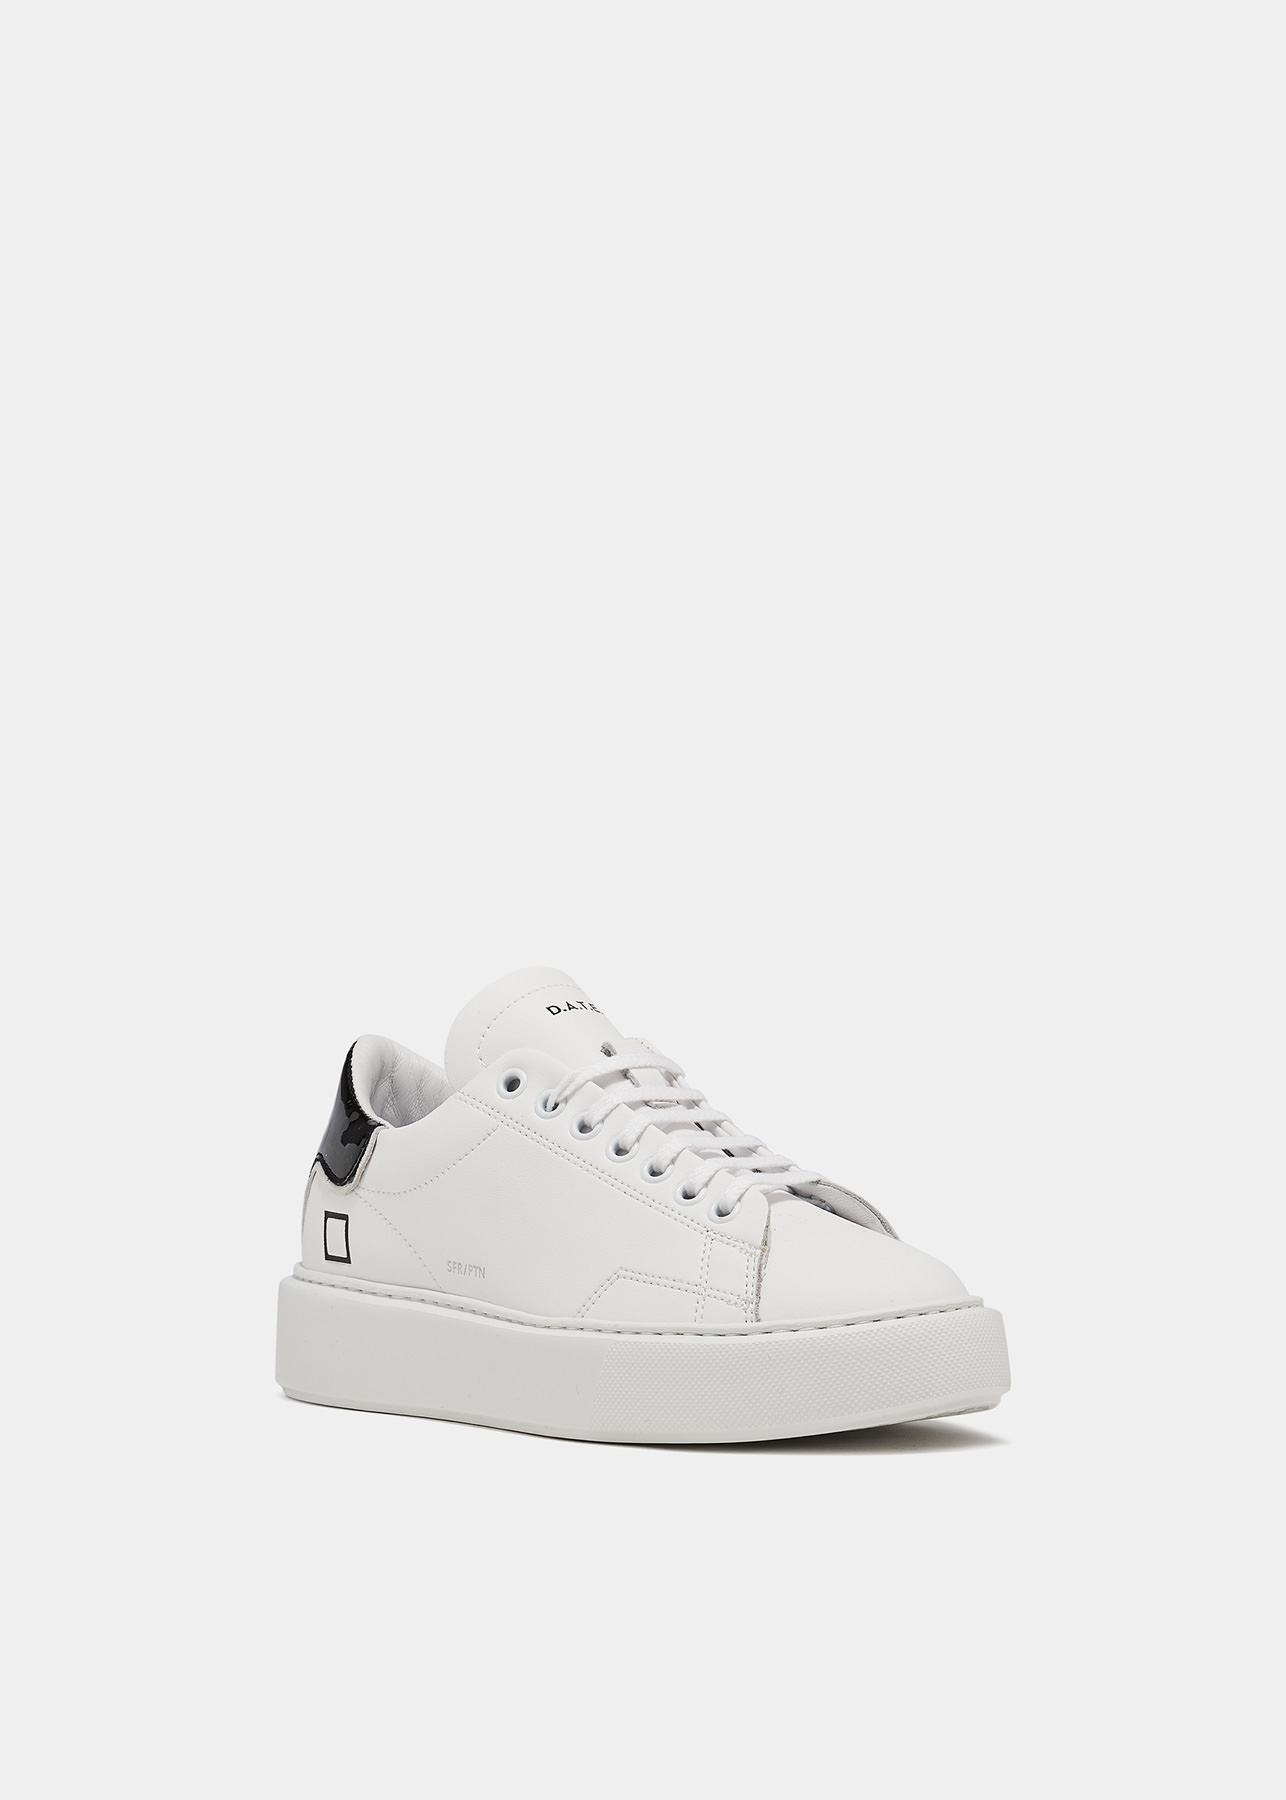 D.A.T.E. Sneakers SFERA PATENT WHITE-BLACK | Date shoes